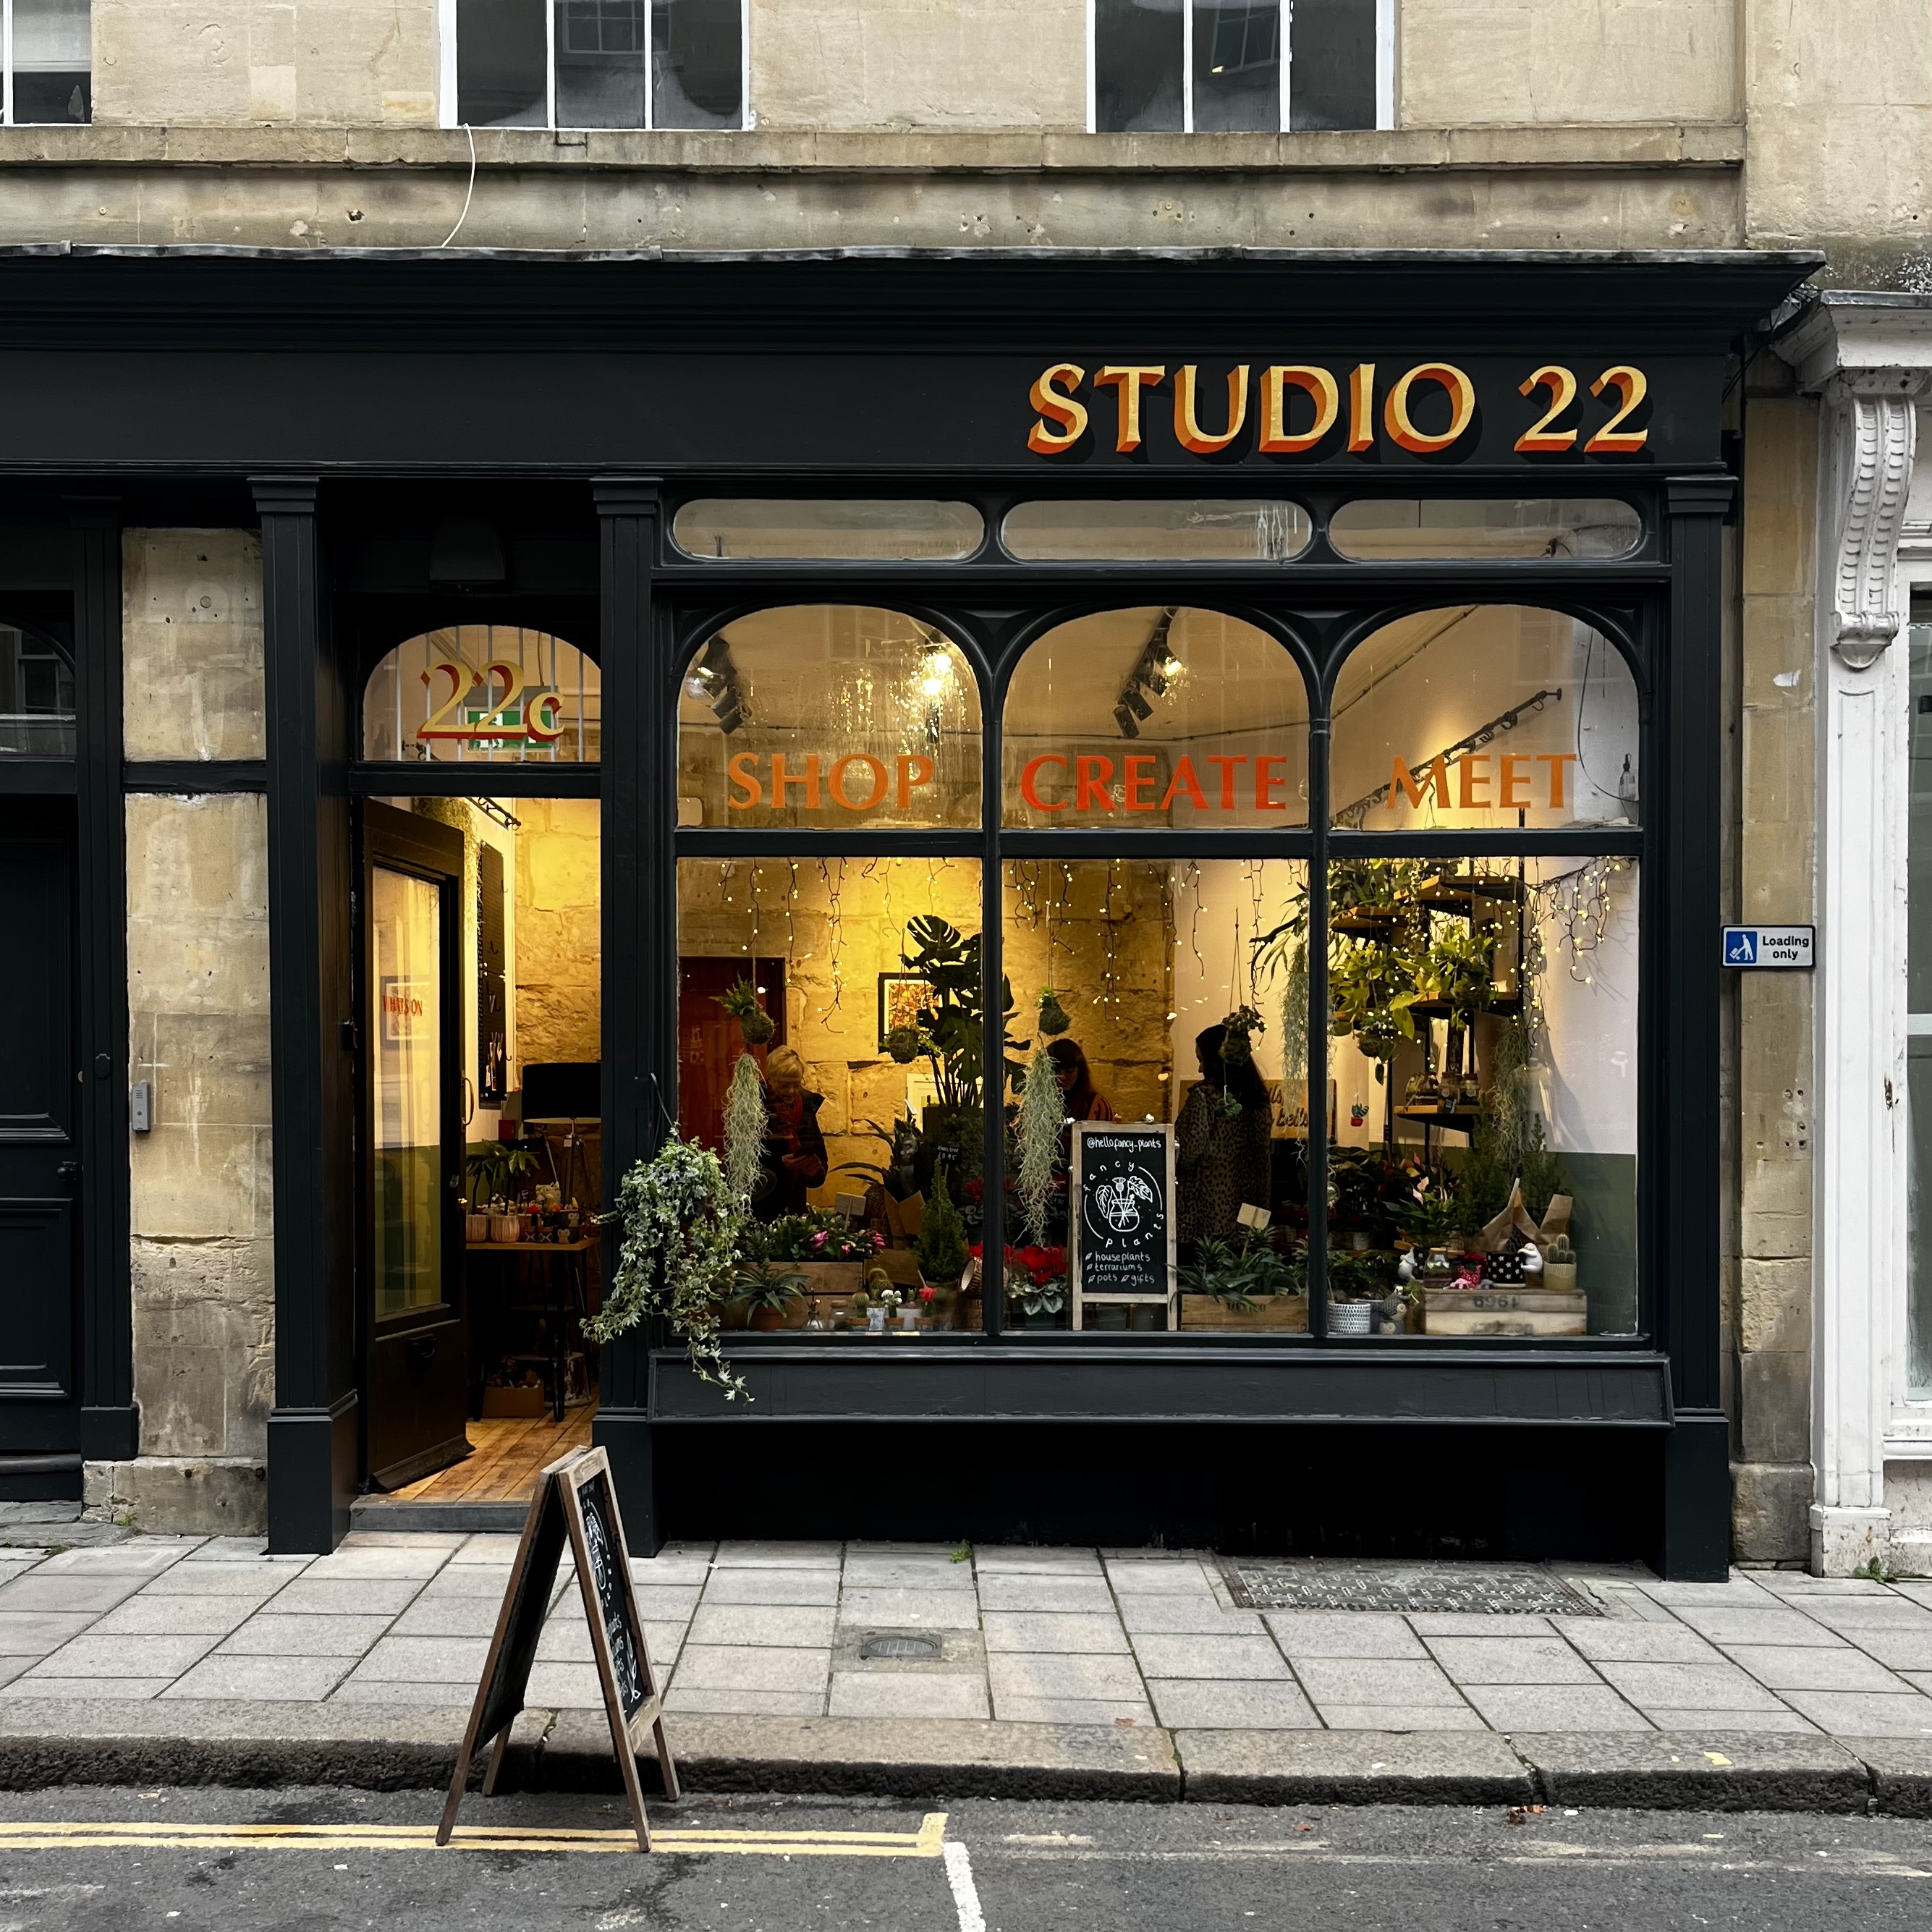 Studio 22 in Bath's Old Post Office